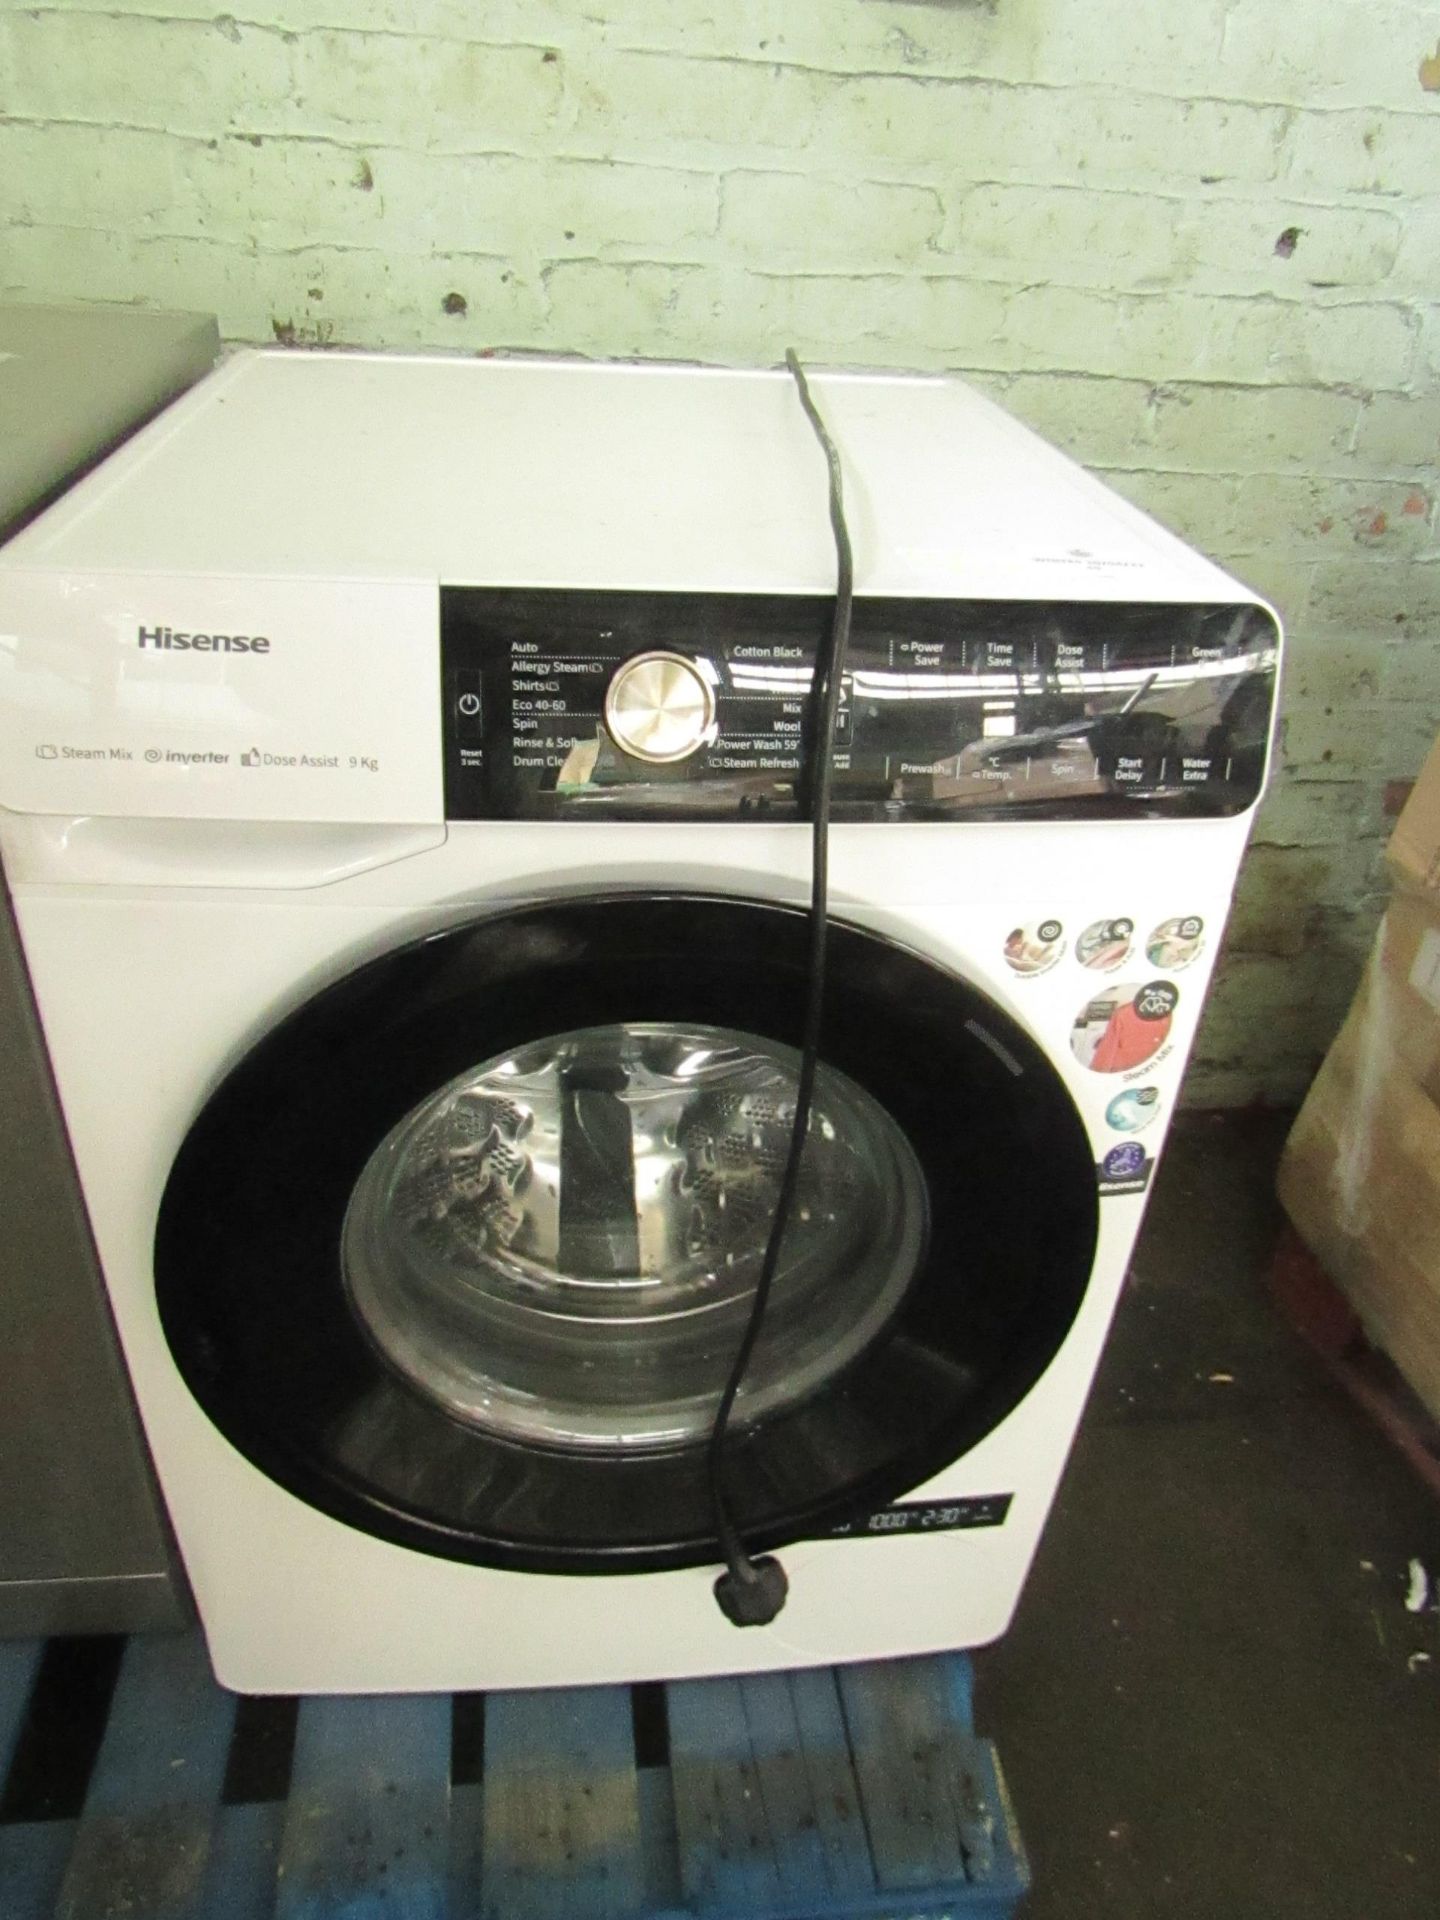 Hisense - Steam Mix Inverter Dose Assist 9kg Washing Machine - No Visible Damages - Powers On